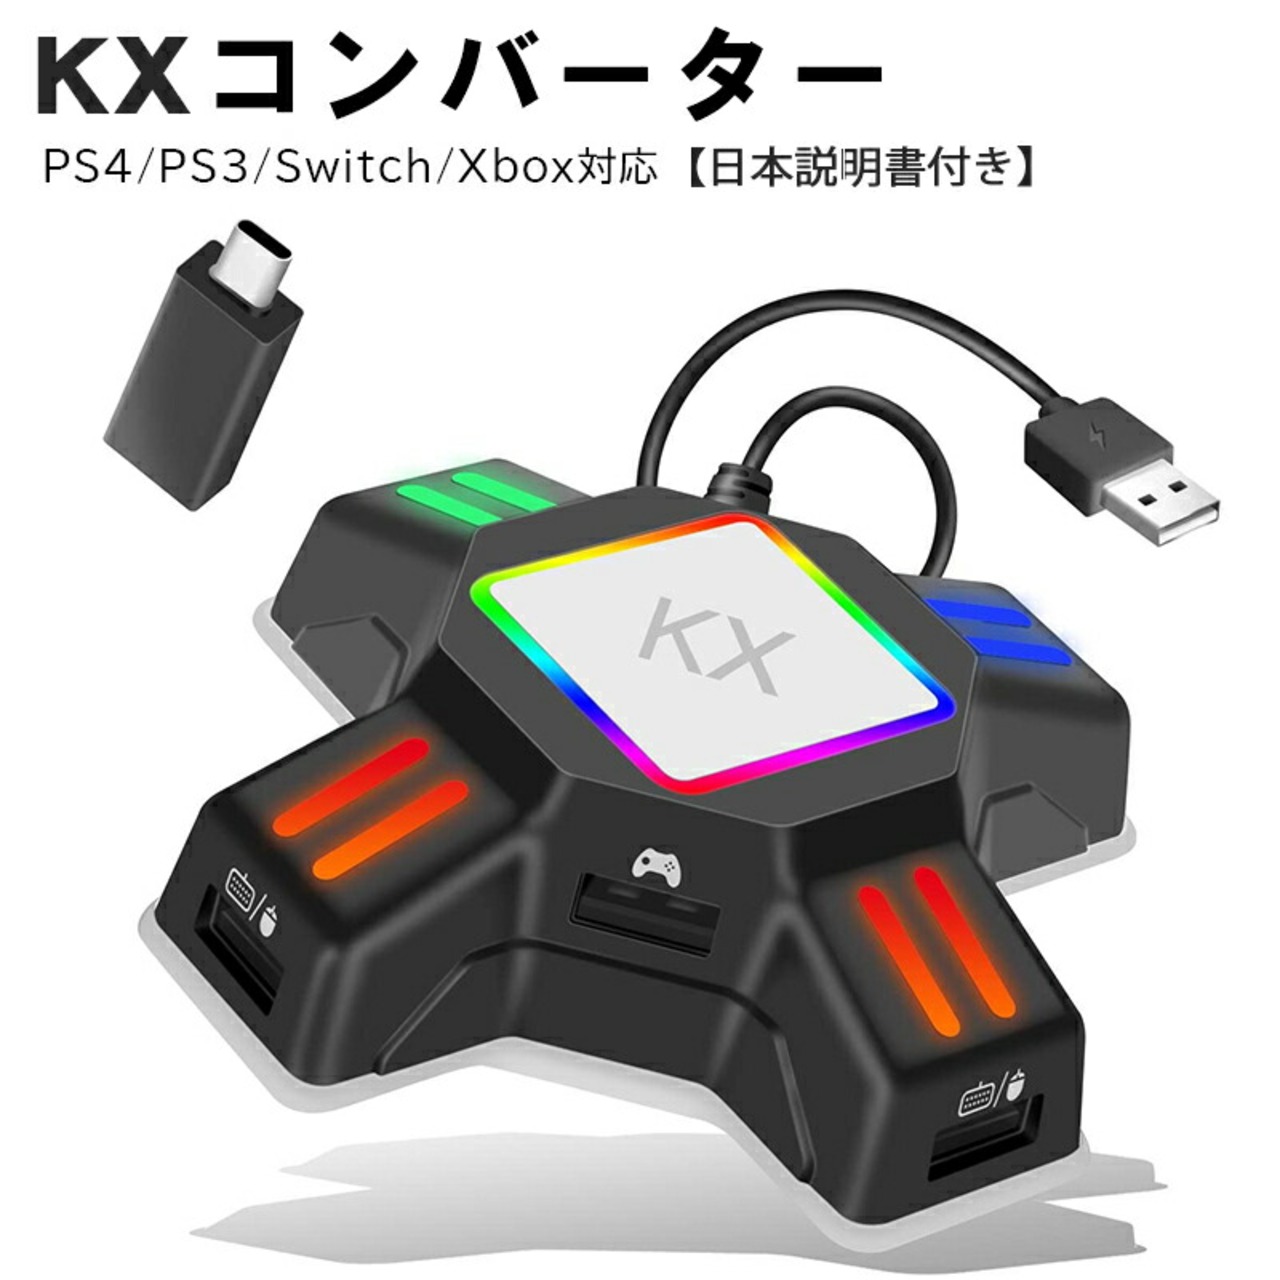 Nintendo Switch PS4 PS3 Xbox コンバーター 接続アダプタ付き 日本語説明書付き [KX] 任天堂スイッチ ニンテンドー  プレイステーション プレステ FPS TPS RPG RTS ゲーム 【送料無料】 | ゲームショップTGK